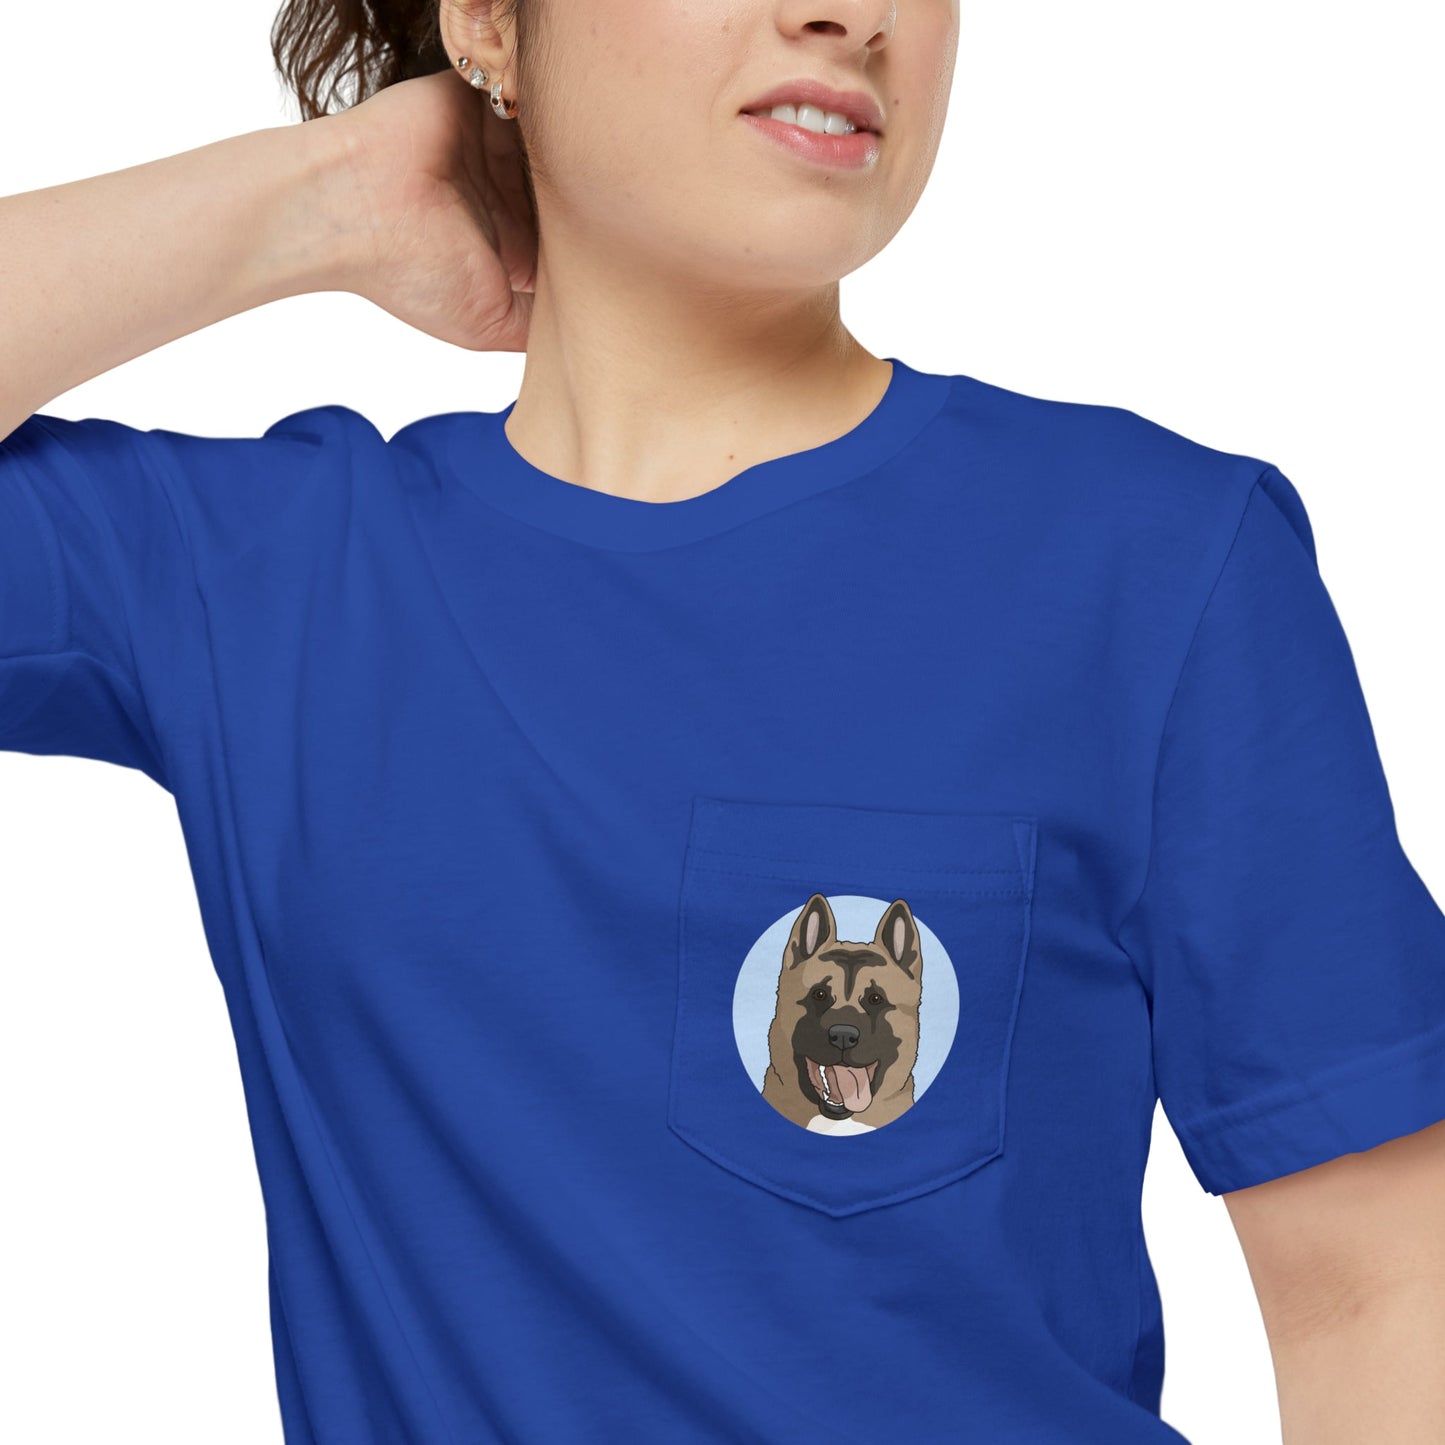 Akita | Pocket T-shirt - Detezi Designs-15670750551905547802